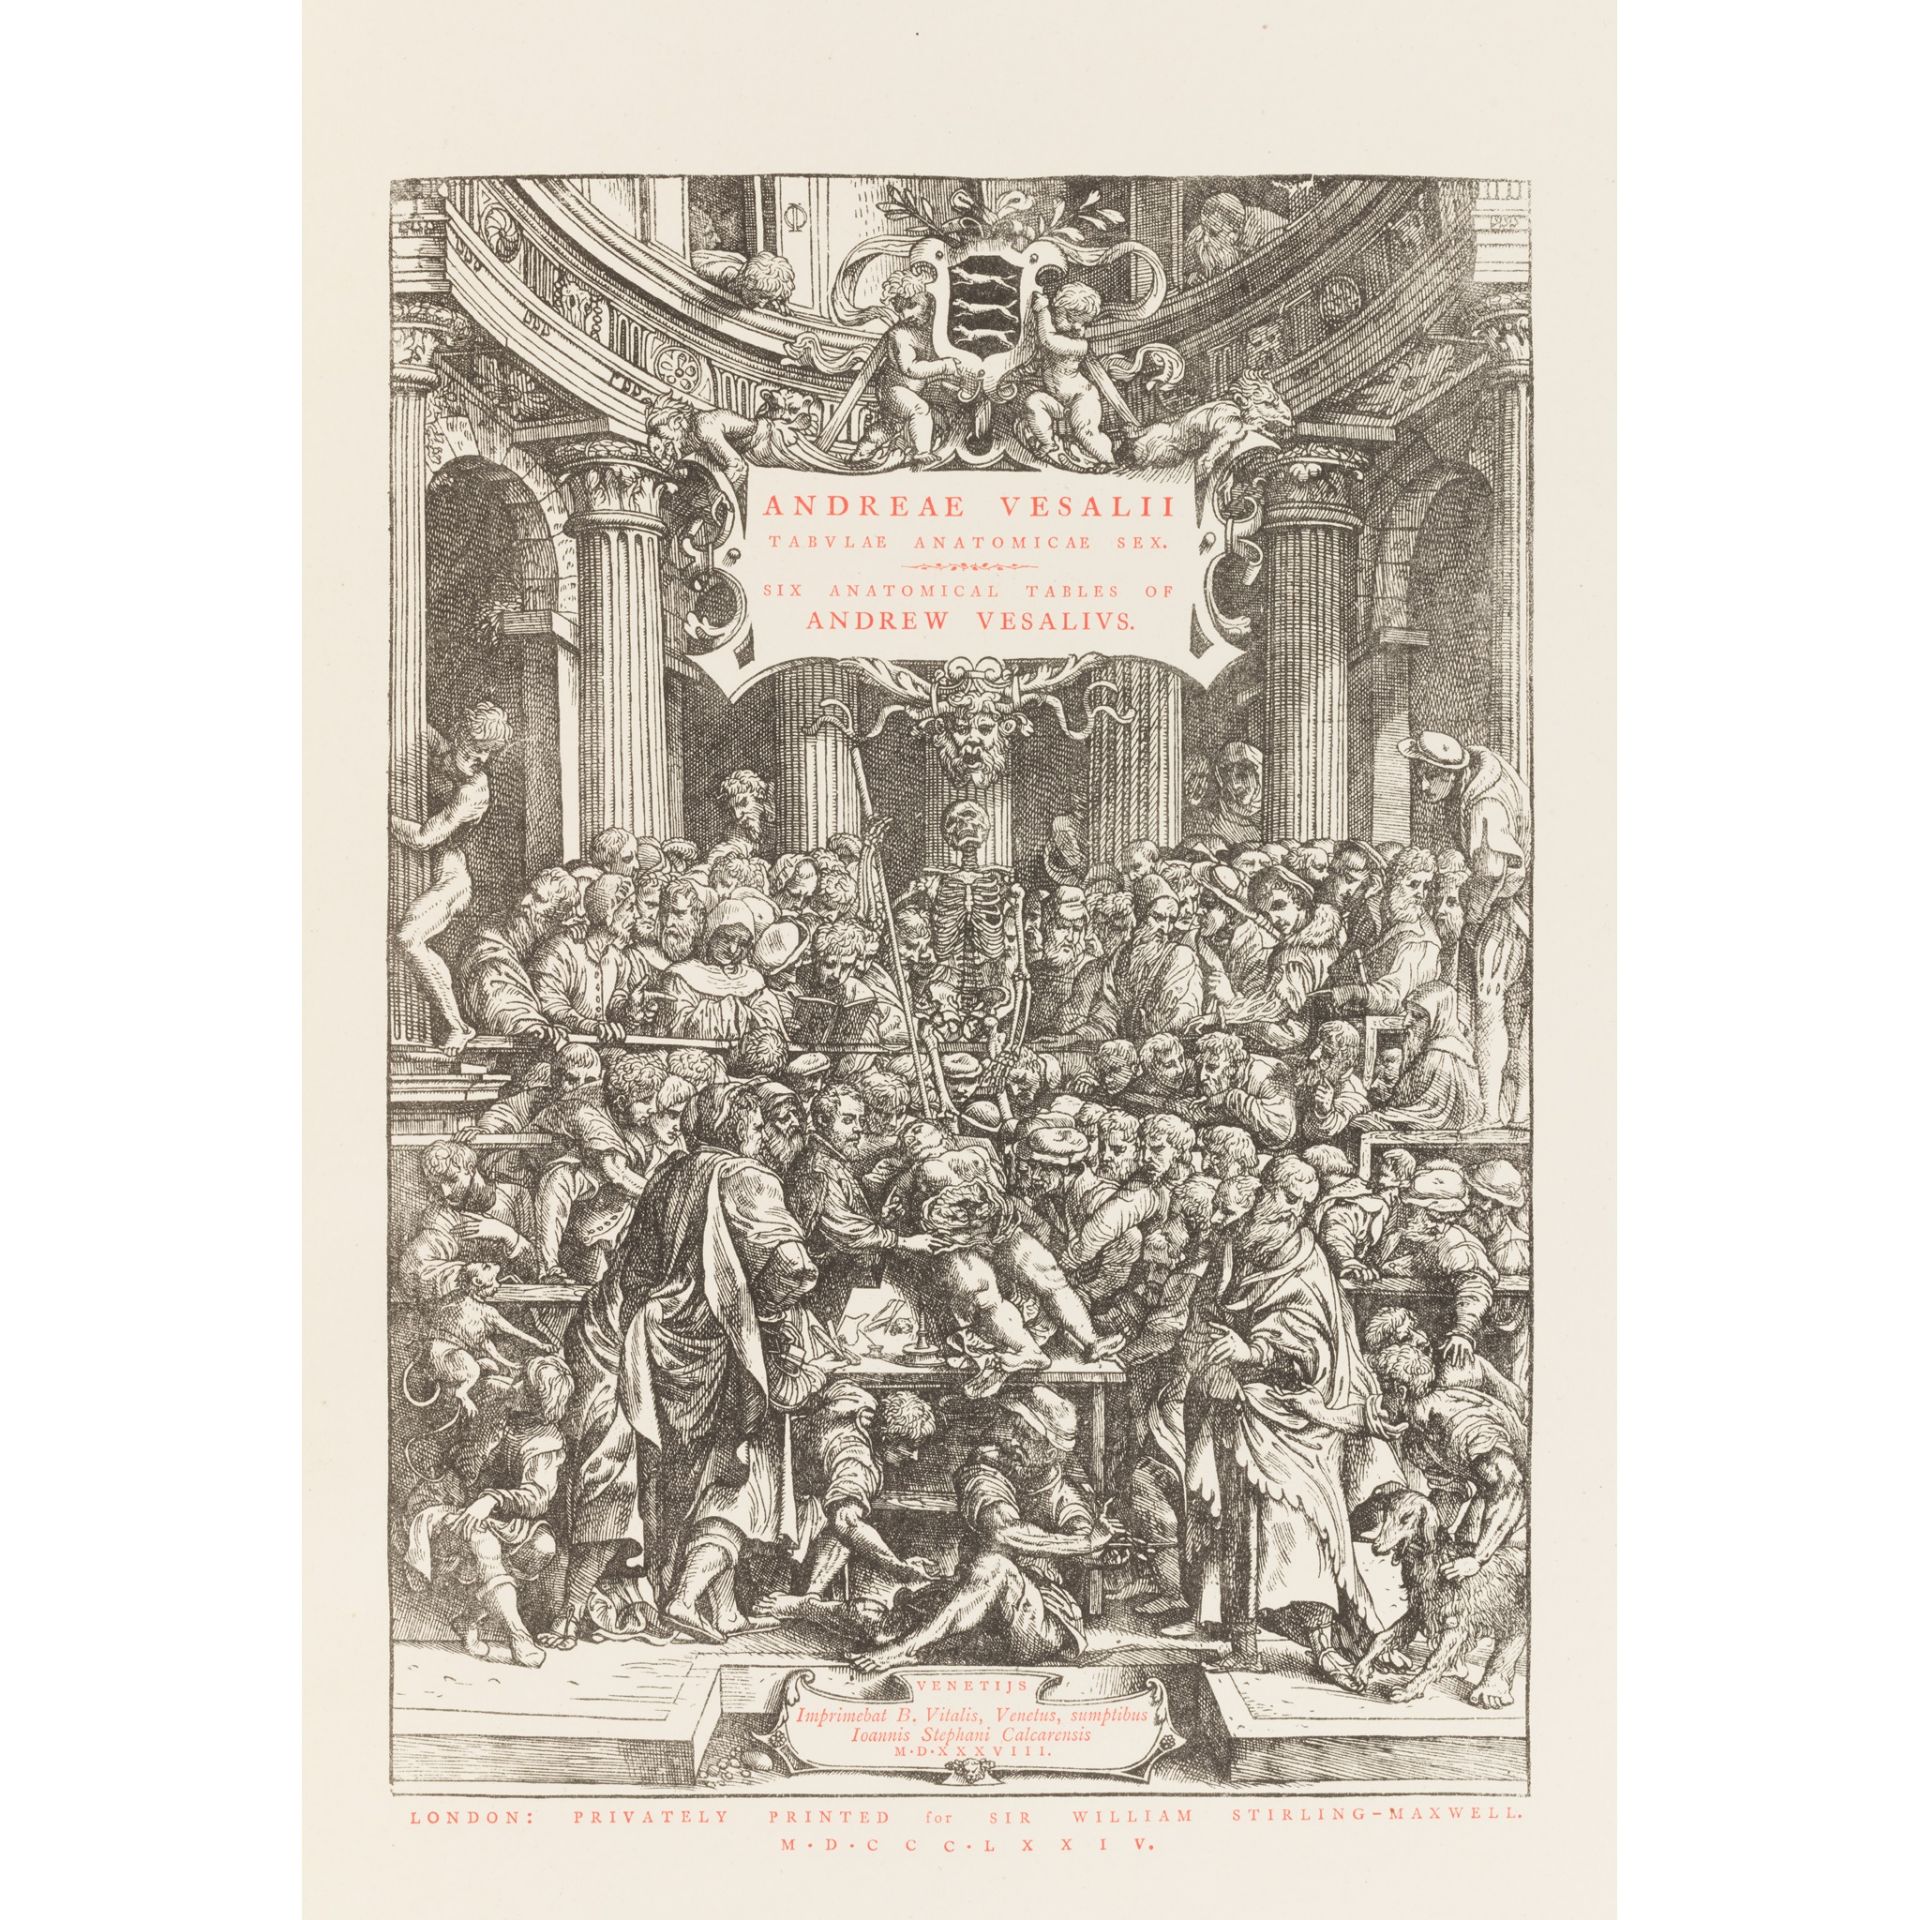 Stirling-Maxwell, Sir William (publisher) - Vesalius, Andreas Tabulae anatomicae sex